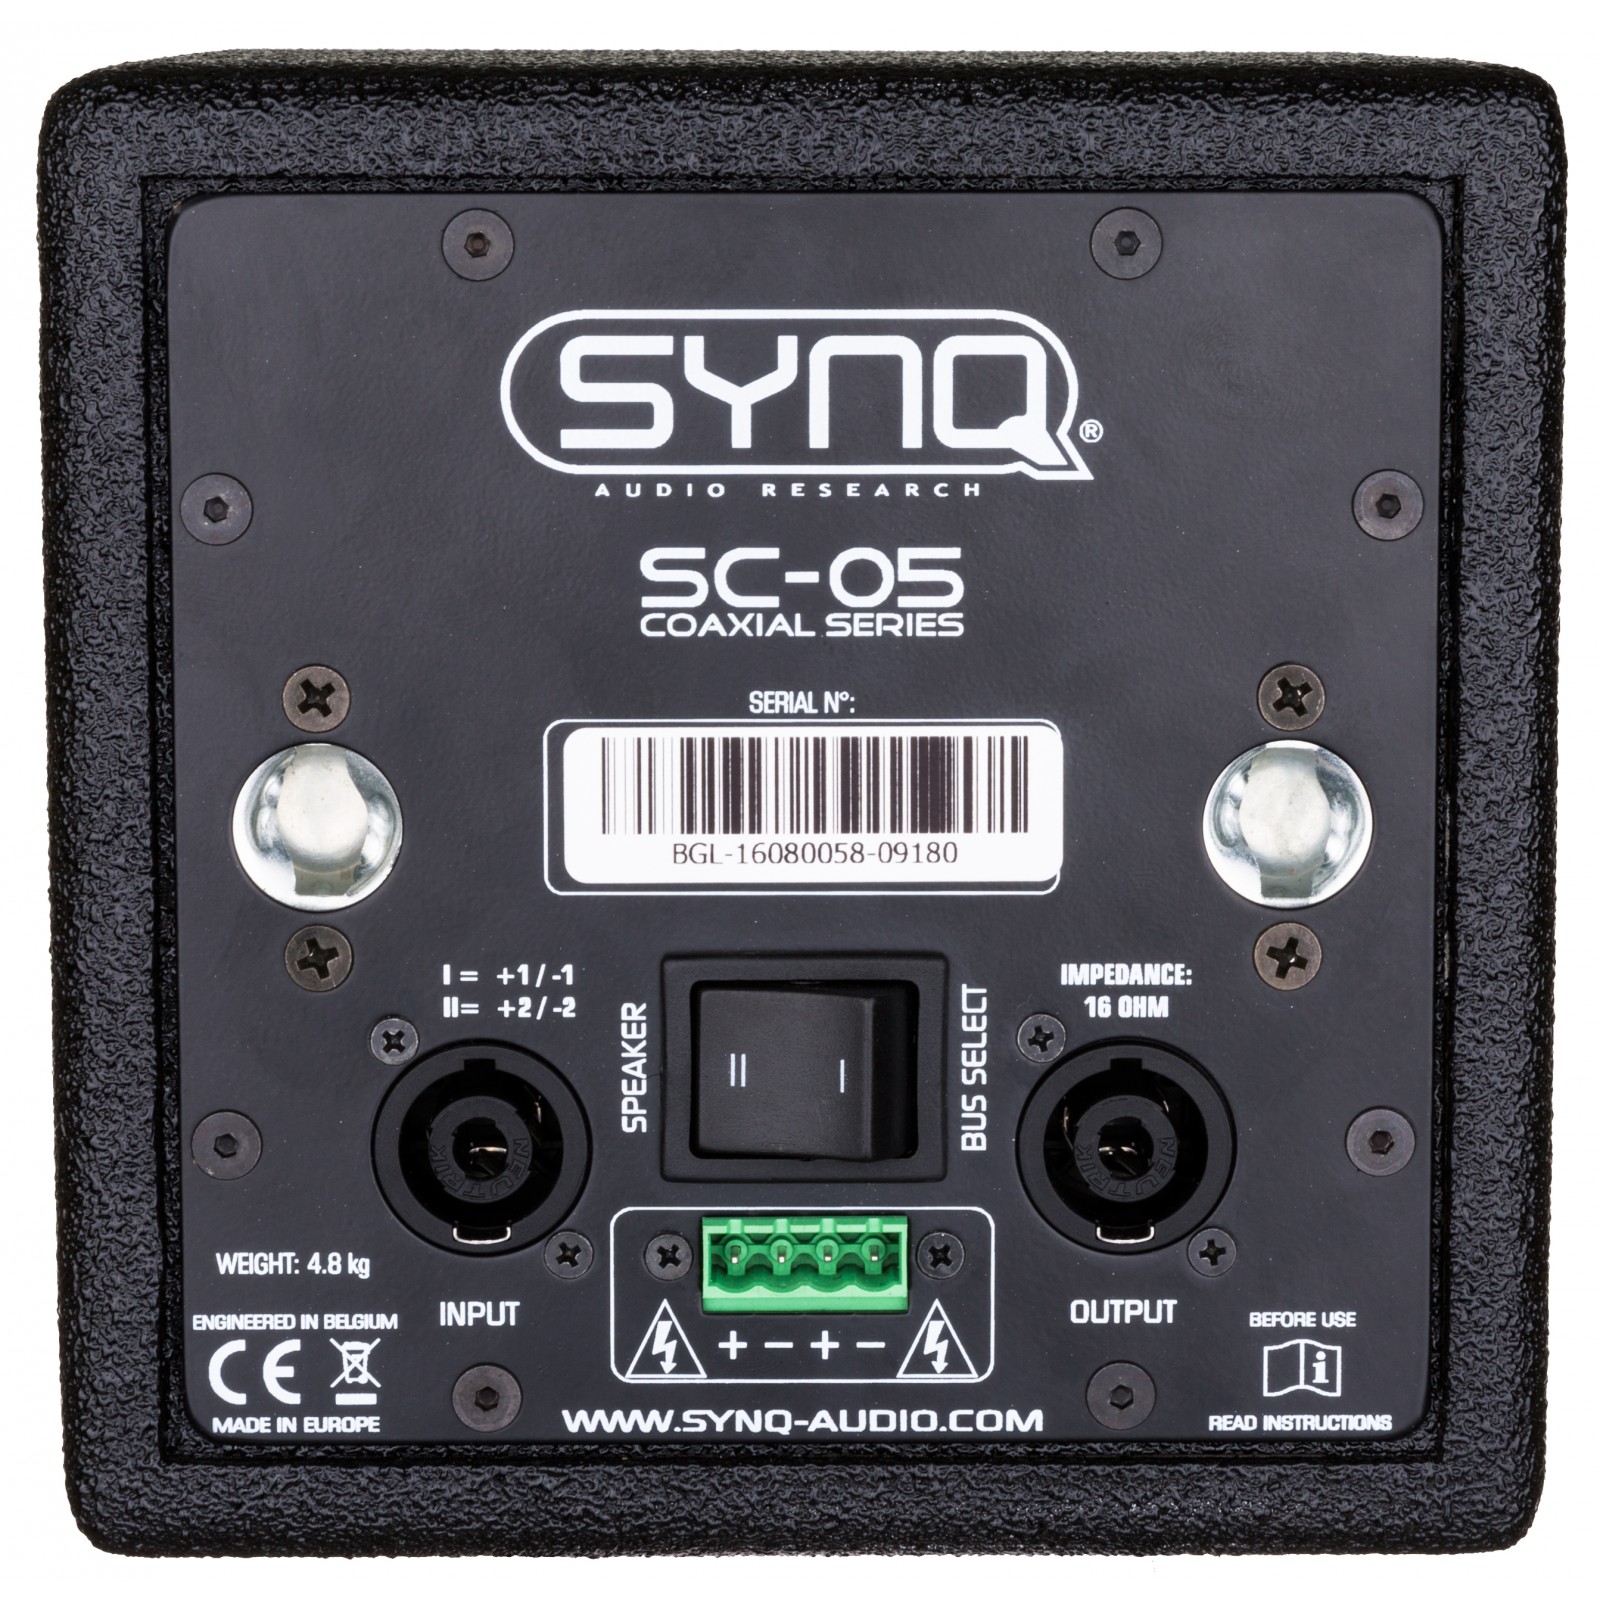 DEMO / OCCASION - GAR 6 mois - SYNQ SC-05 Pro Enceinte coaxiale compacte 5"